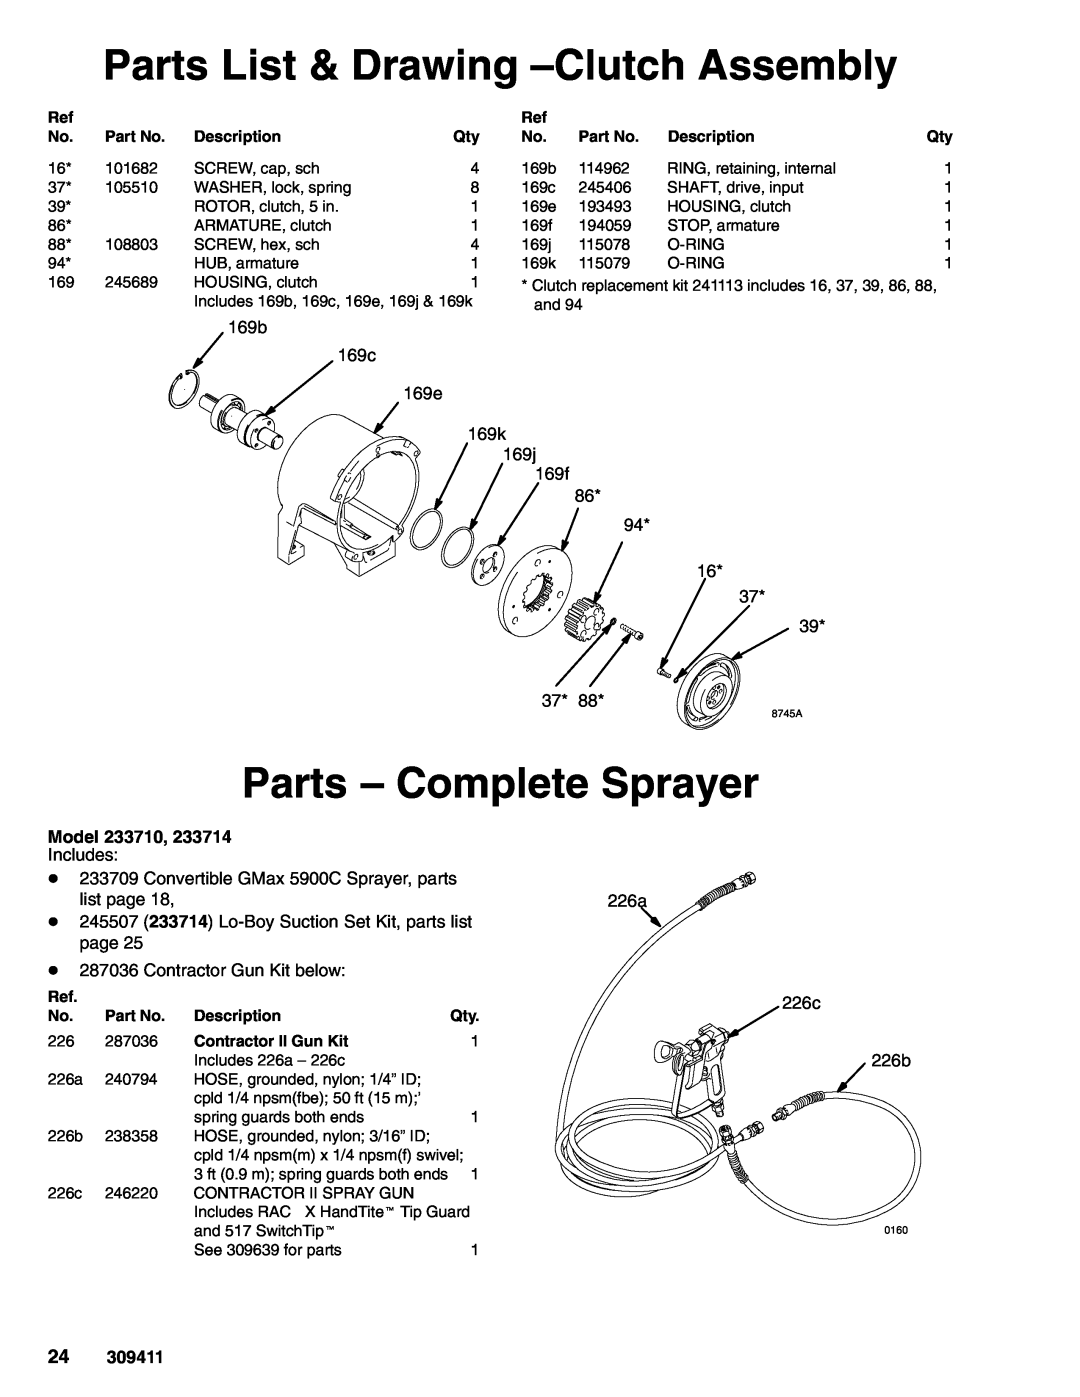 Graco 233711, 233712, 233715 Parts List & Drawing -Clutch Assembly, Parts - Complete Sprayer, Model 233710, Description 